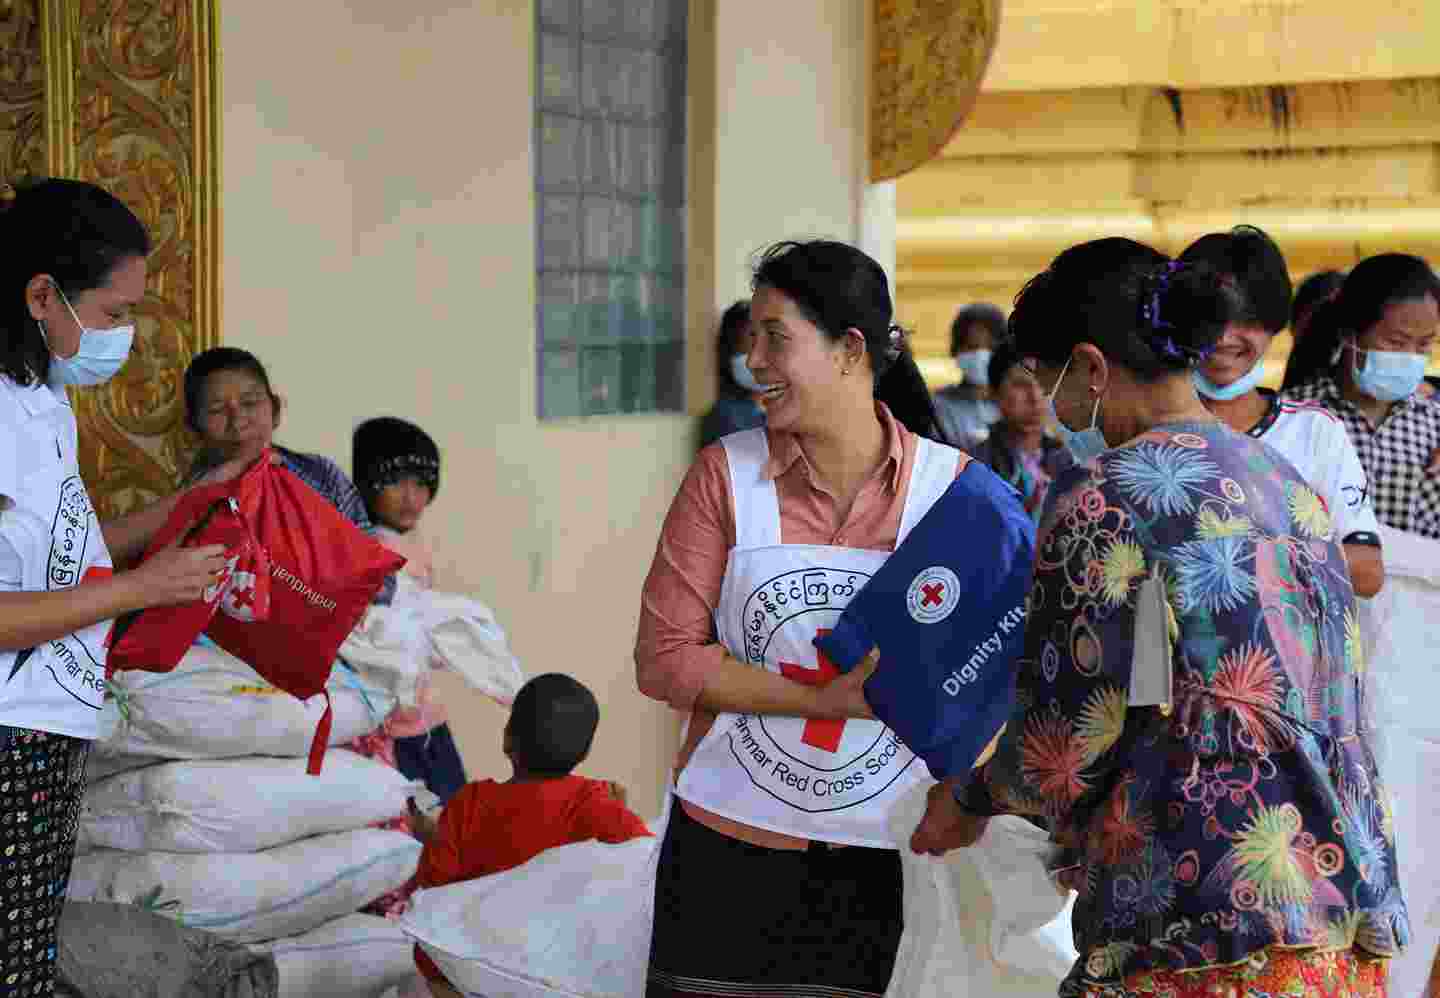 A Red Cross volunteer distributing aid packages.